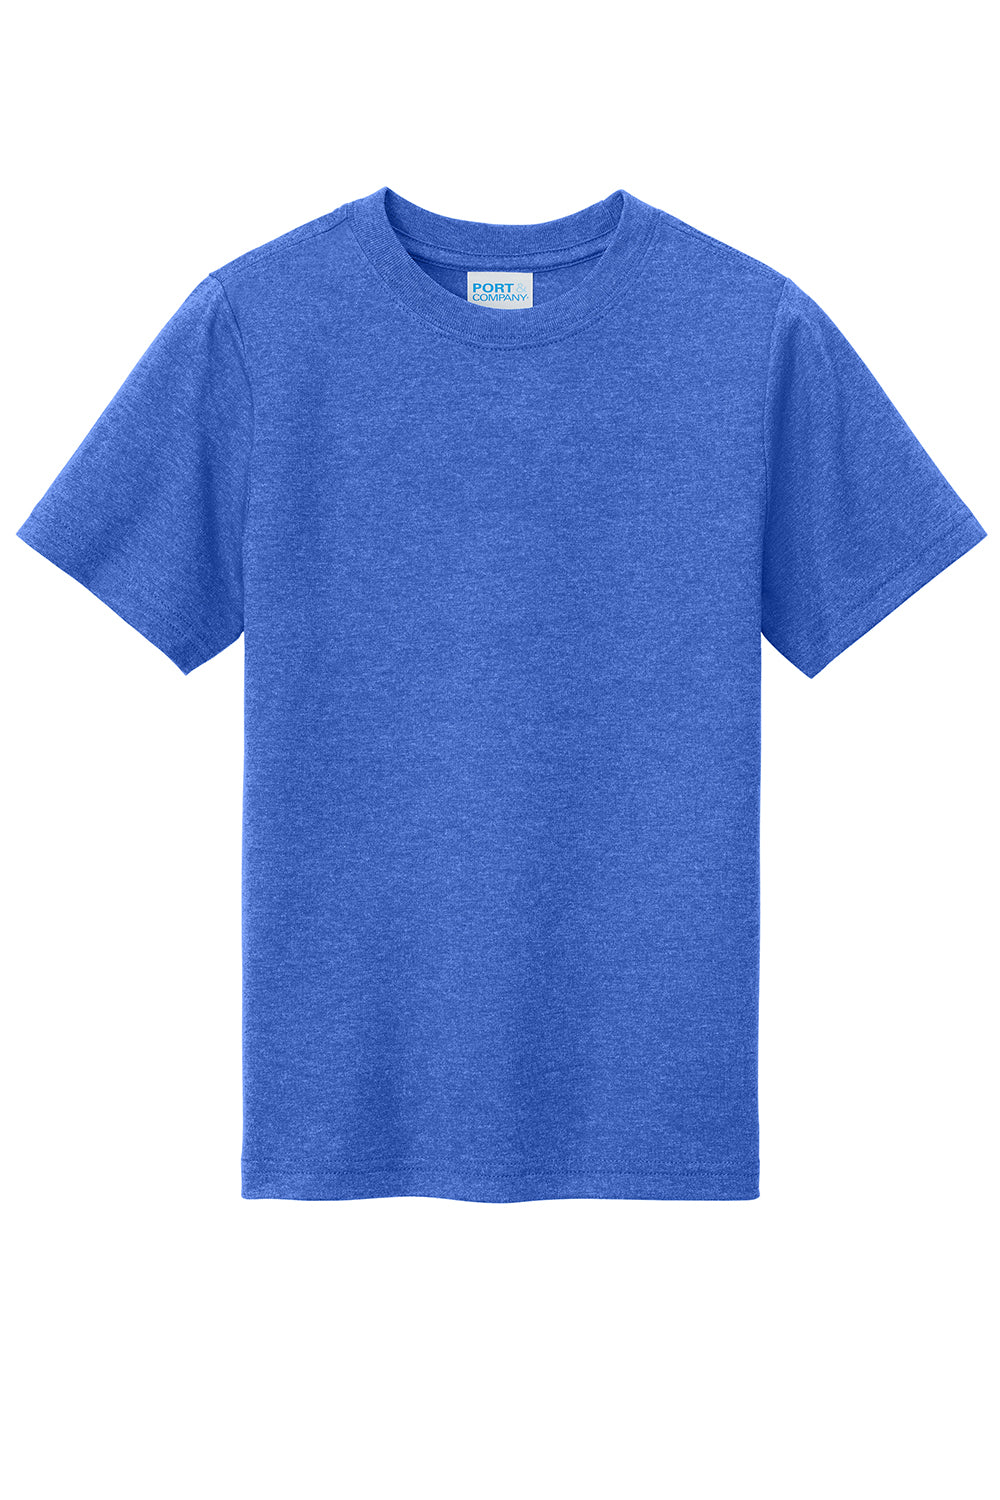 Port & Company PC330Y Youth Short Sleeve Crewneck T-Shirt Heather Royal Blue Flat Front